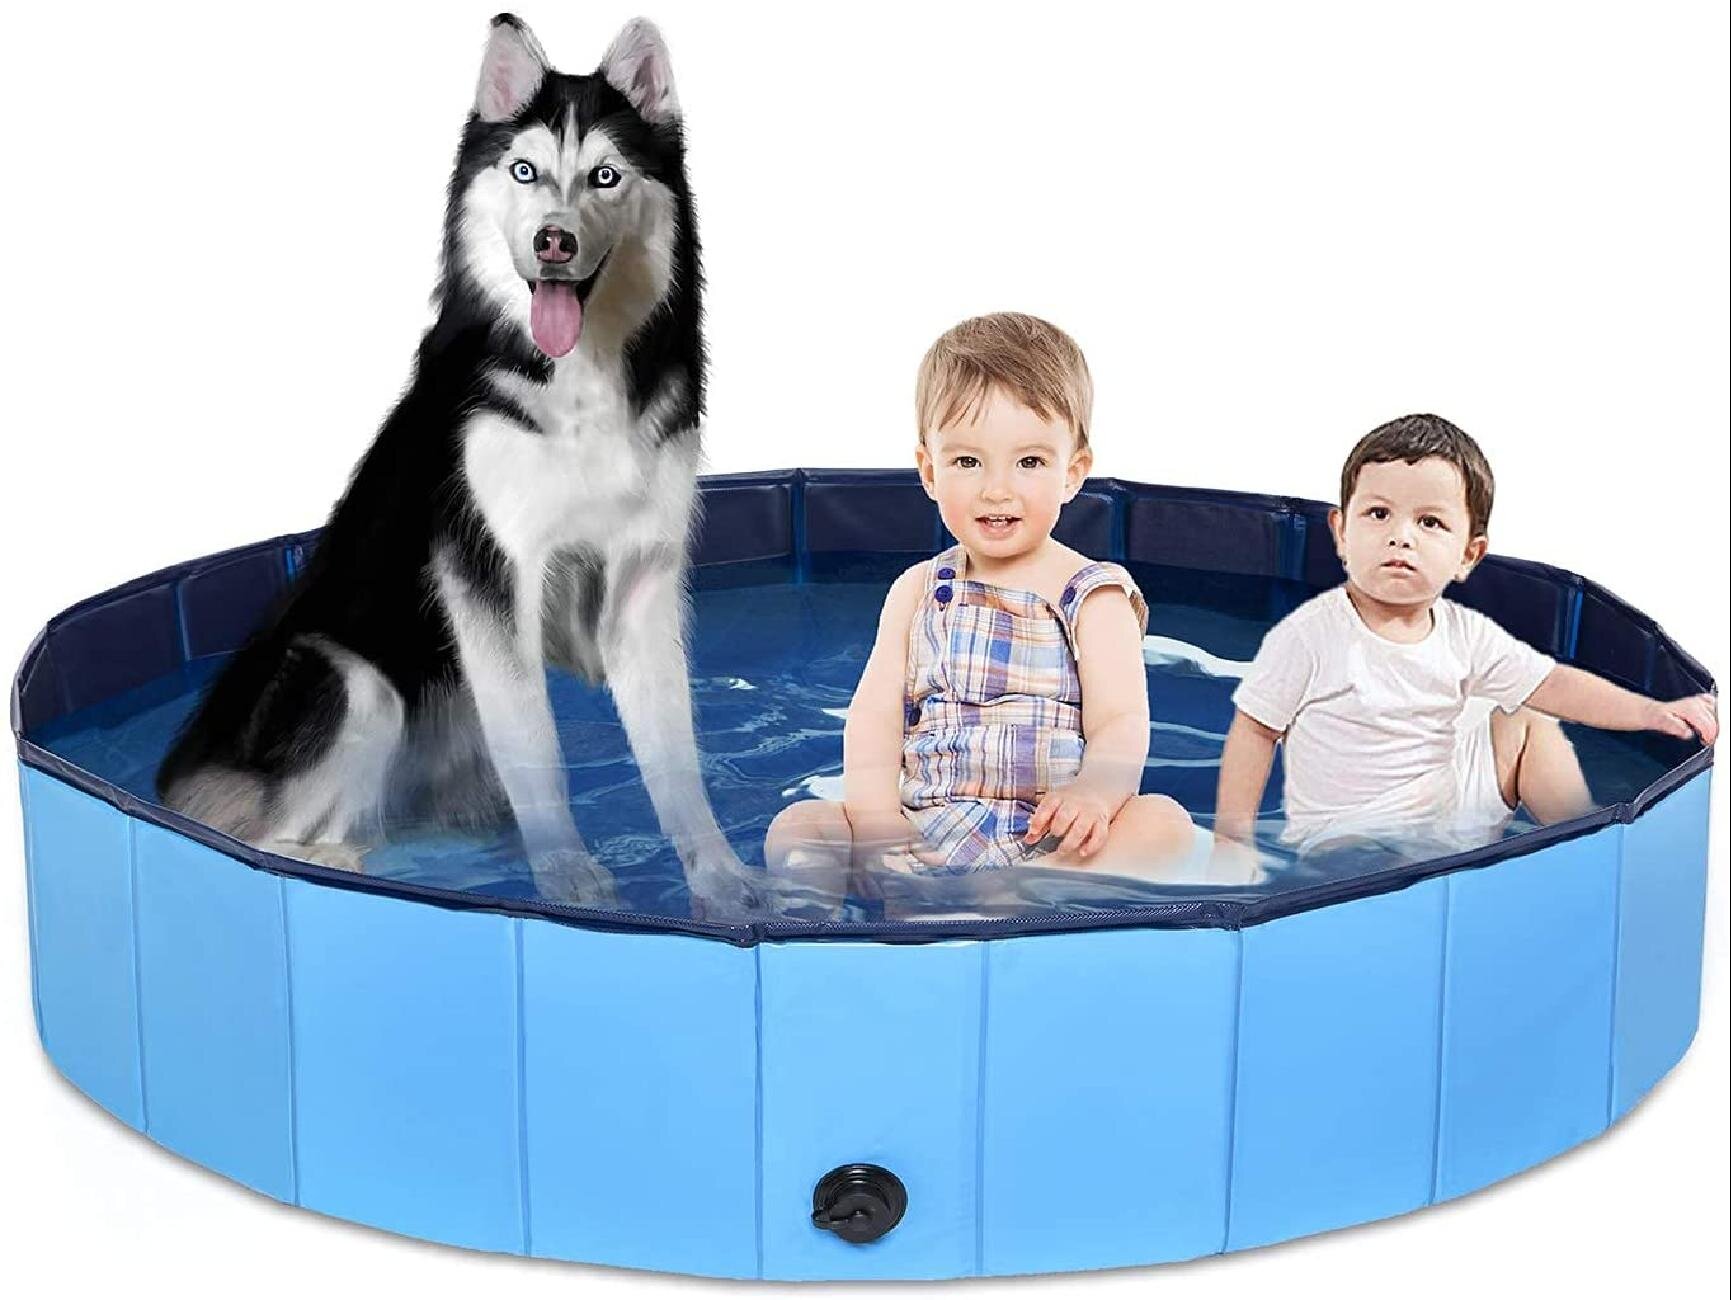 Cherishly Pet Dog Pool Dog Cat Bathing Tub Foldable Sponge Cool Bathtub Indoor Cat Dog Pet Bathing Swimming Pool Tub